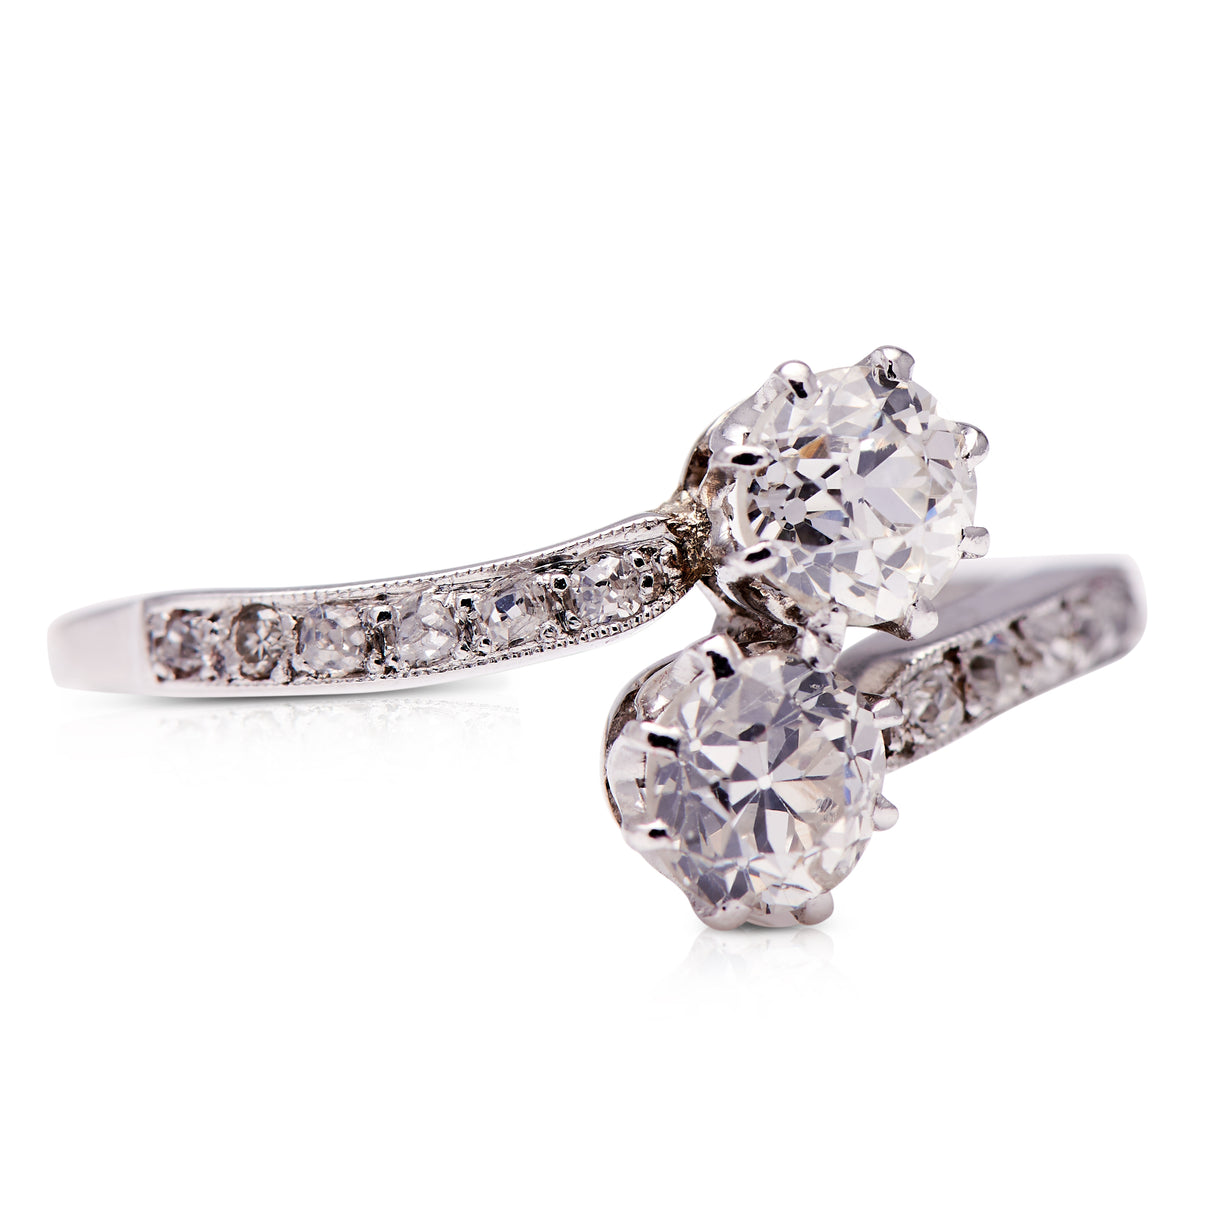 Edwardian Old-Cut Diamond 'Toi et Moi' Engagement Ring, Platinum